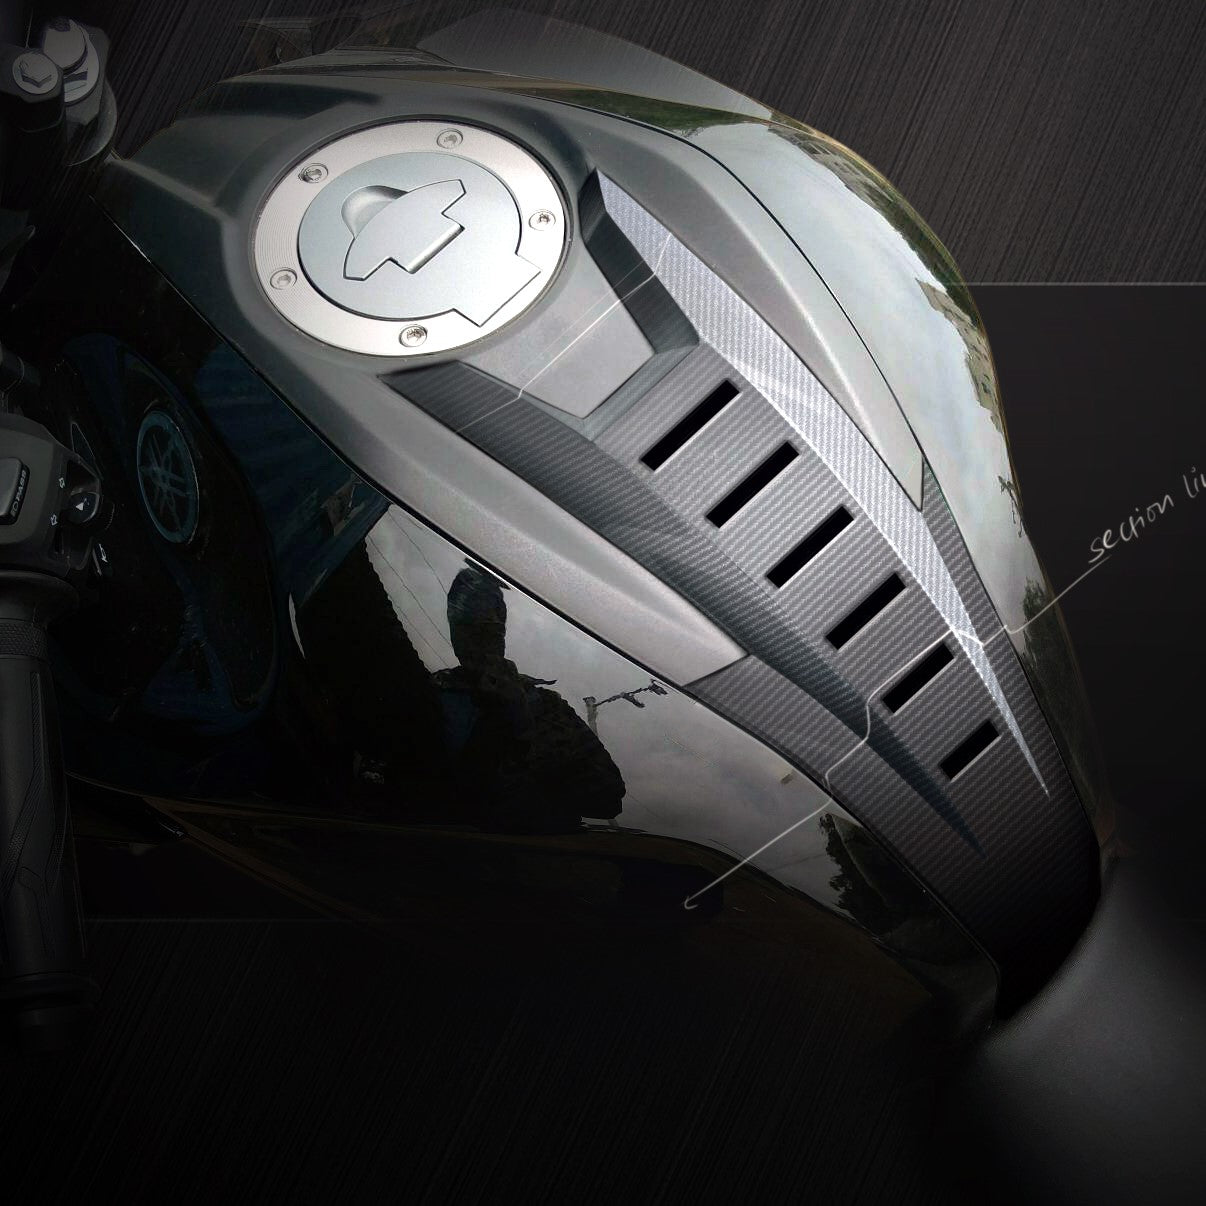 TankTie for Yamaha FZ25 BS4 - Under Development